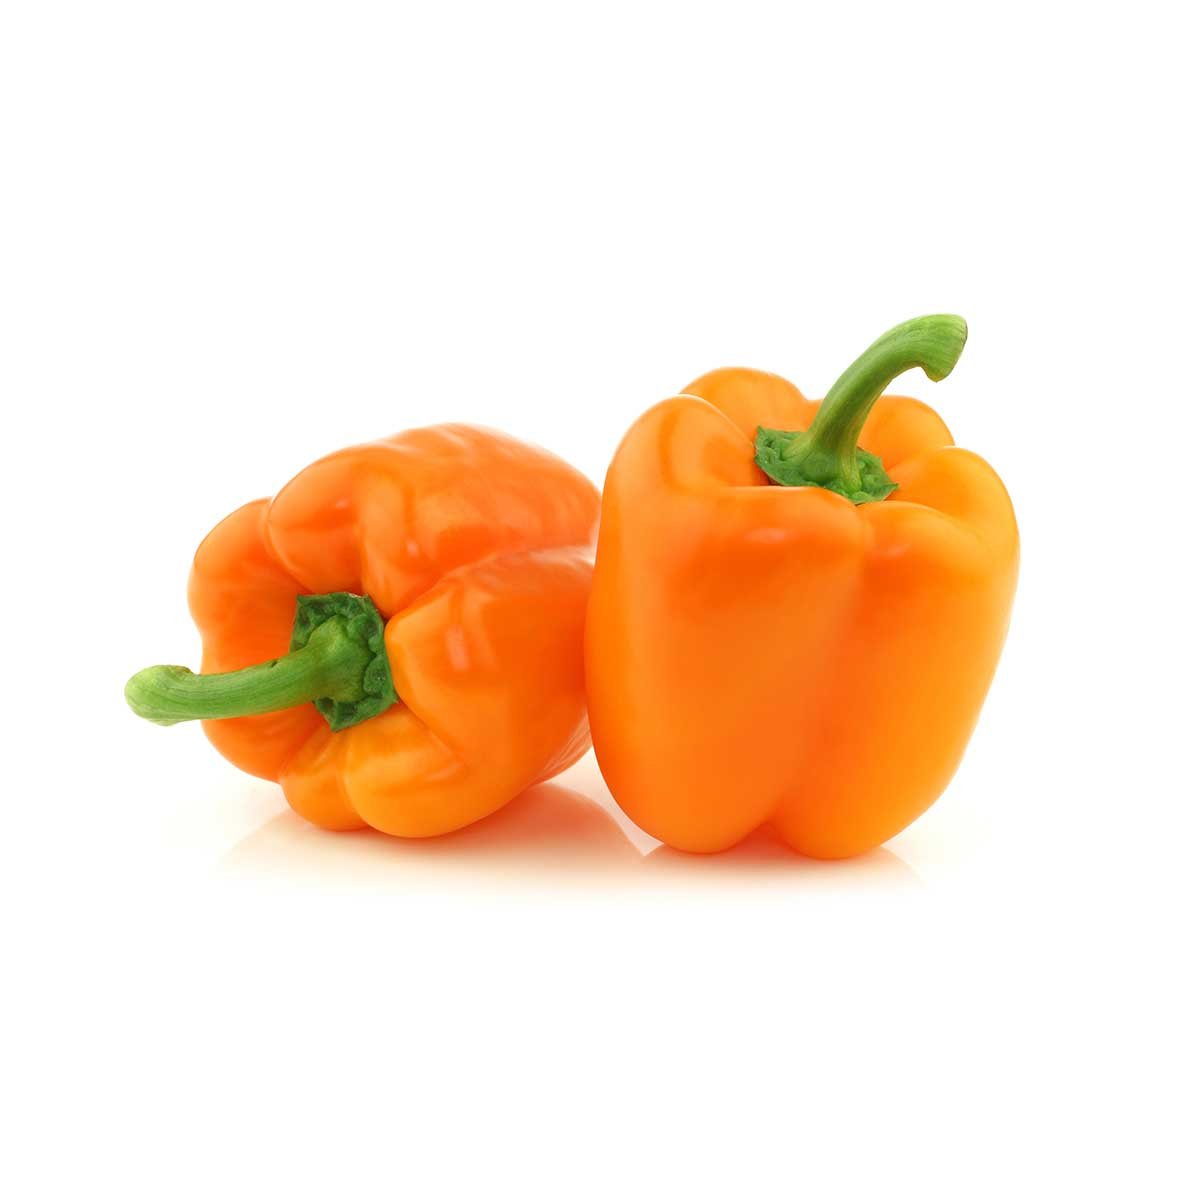 Orange pepper. Перец оранжевый апельсин. Перец сладкий чип оранж. Перец оранжевый сладкий. Перец оранжевый весовой.